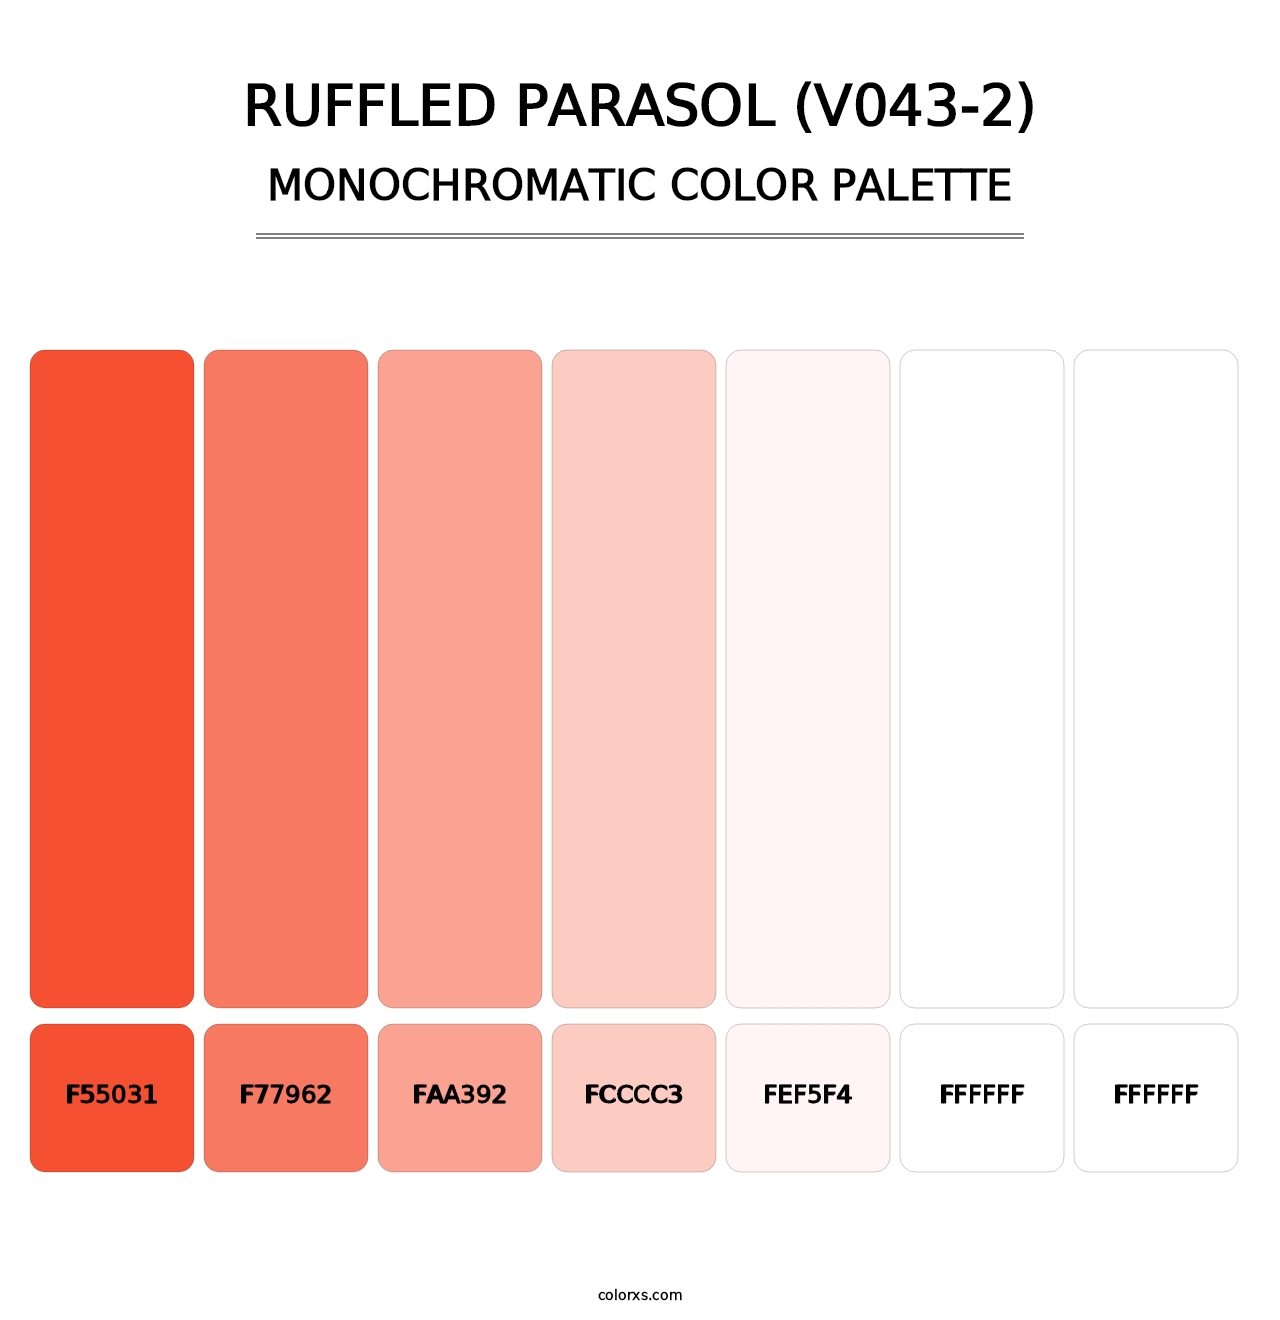 Ruffled Parasol (V043-2) - Monochromatic Color Palette